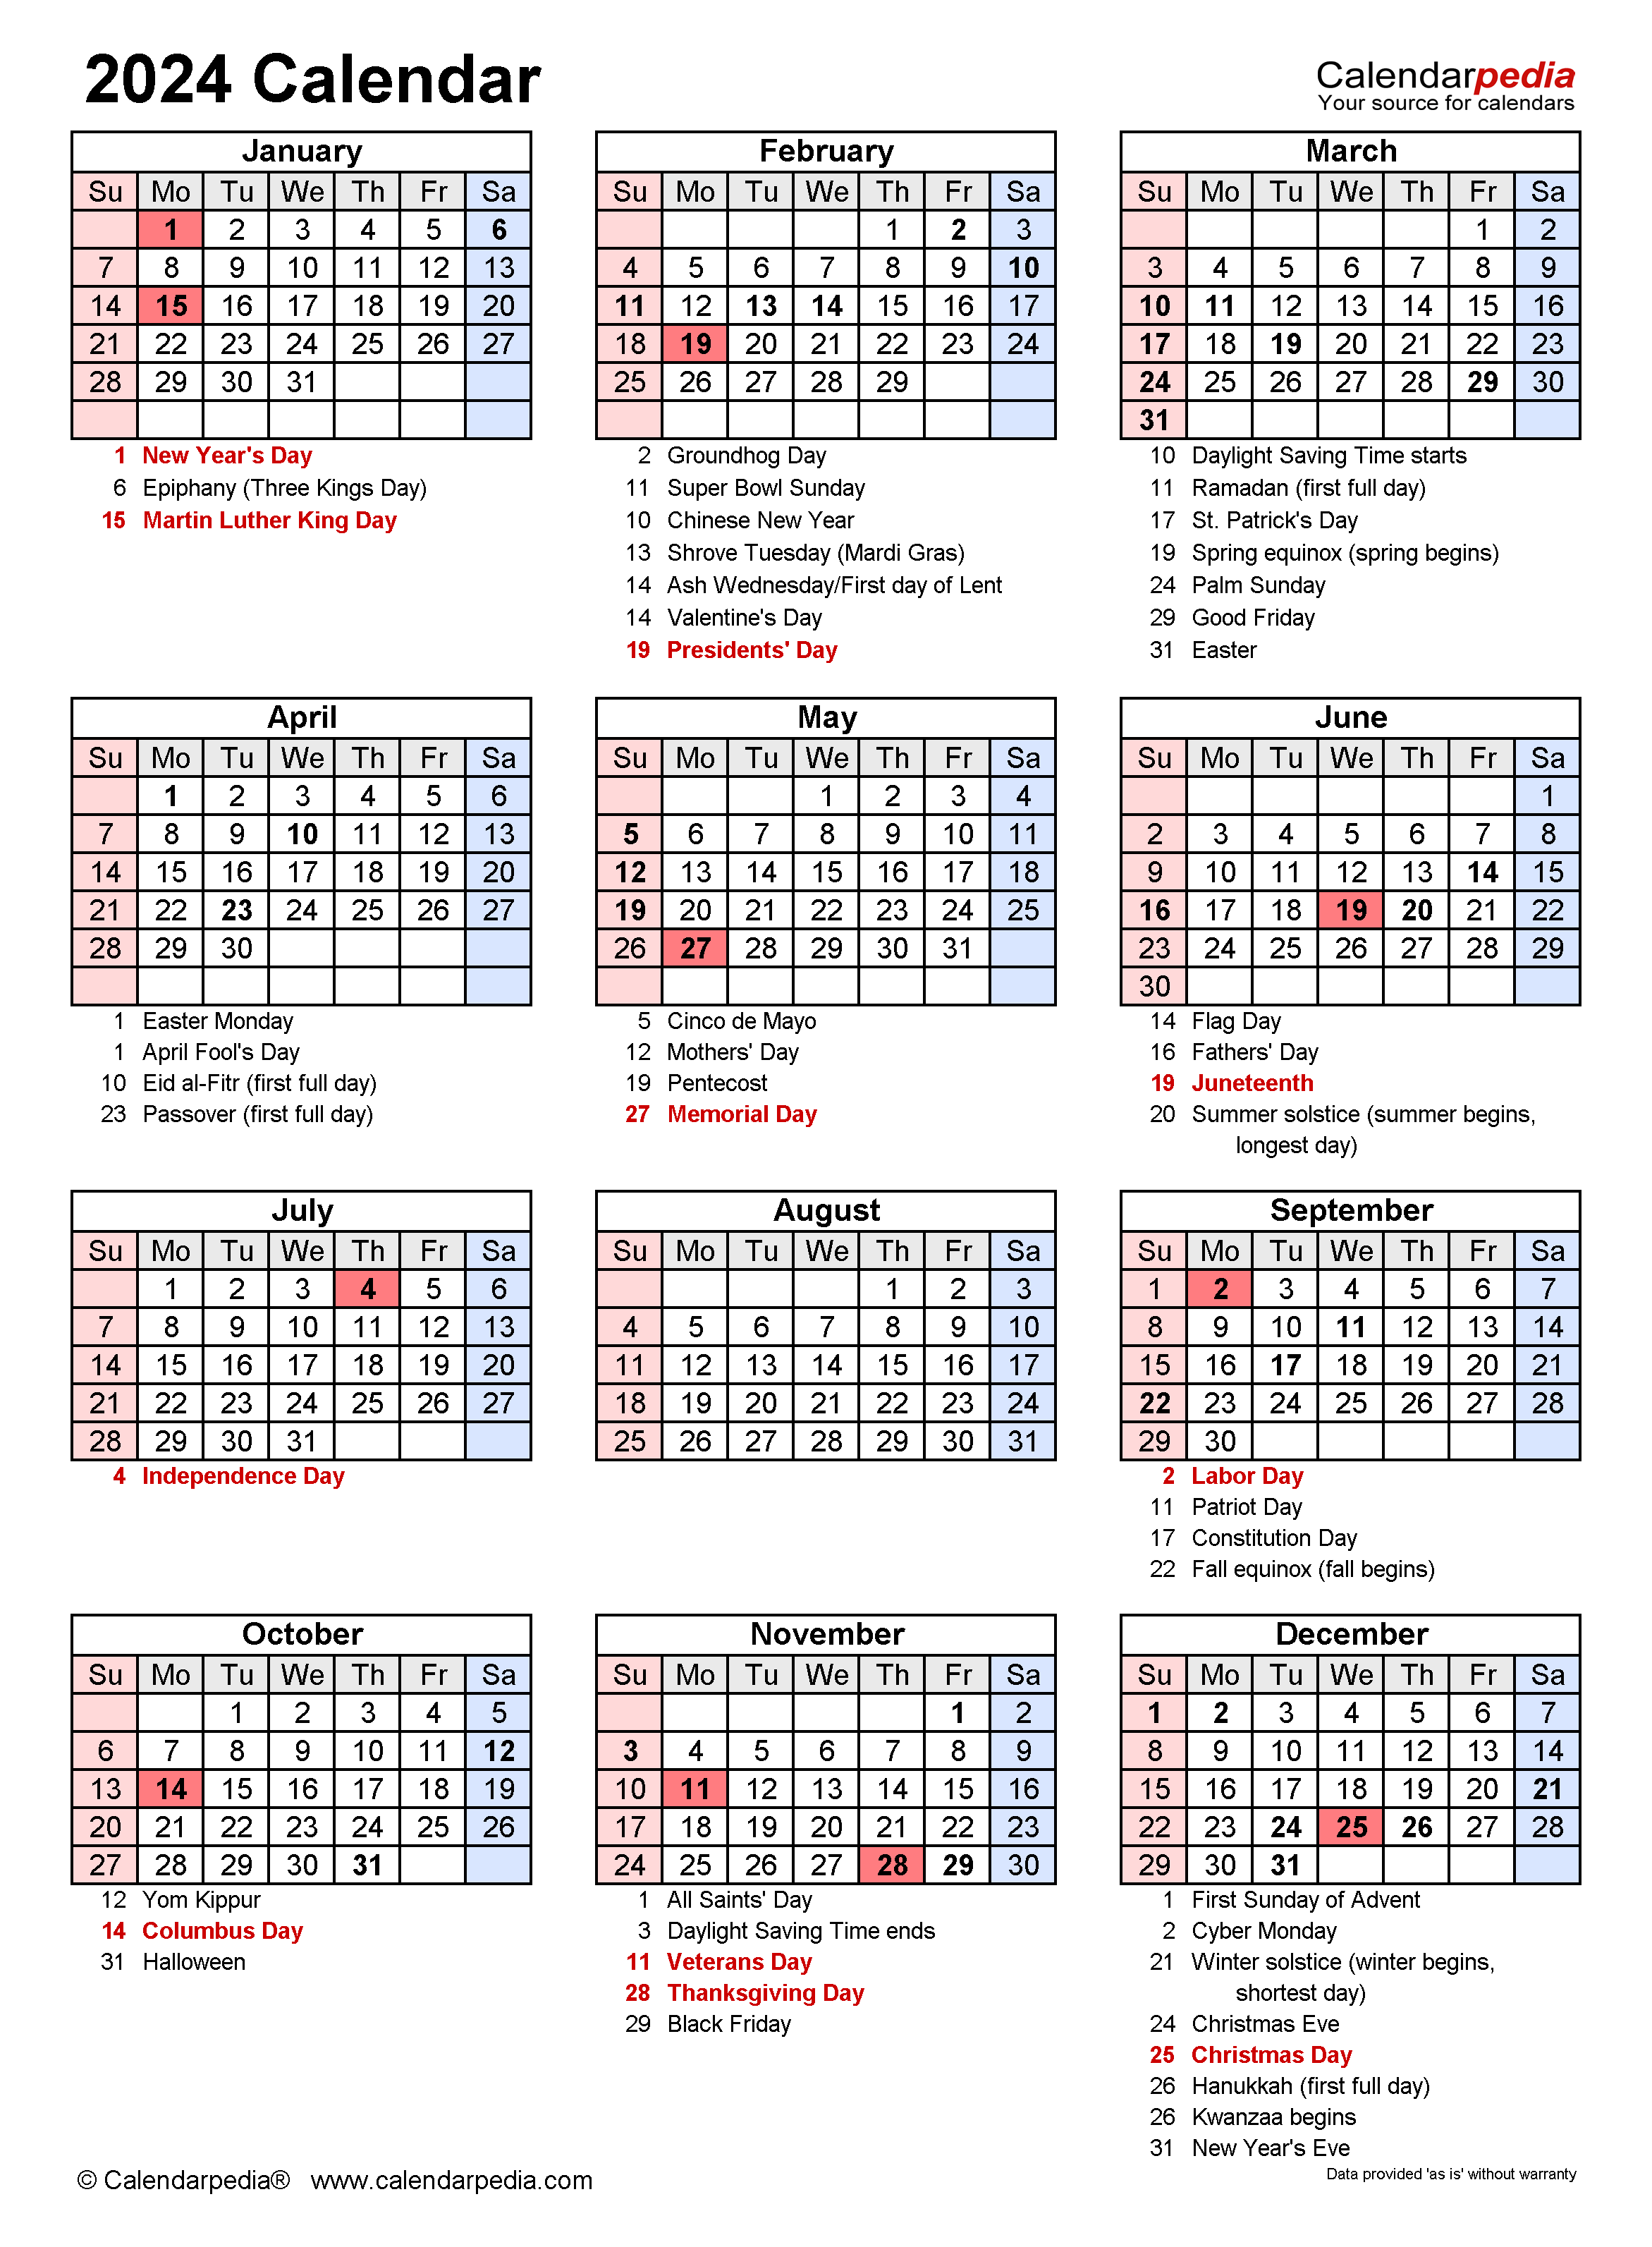 2024 Calendar Free Printable PDF Templates Calendarpedia - Free Printable 2024 Calendar With Date Boxes